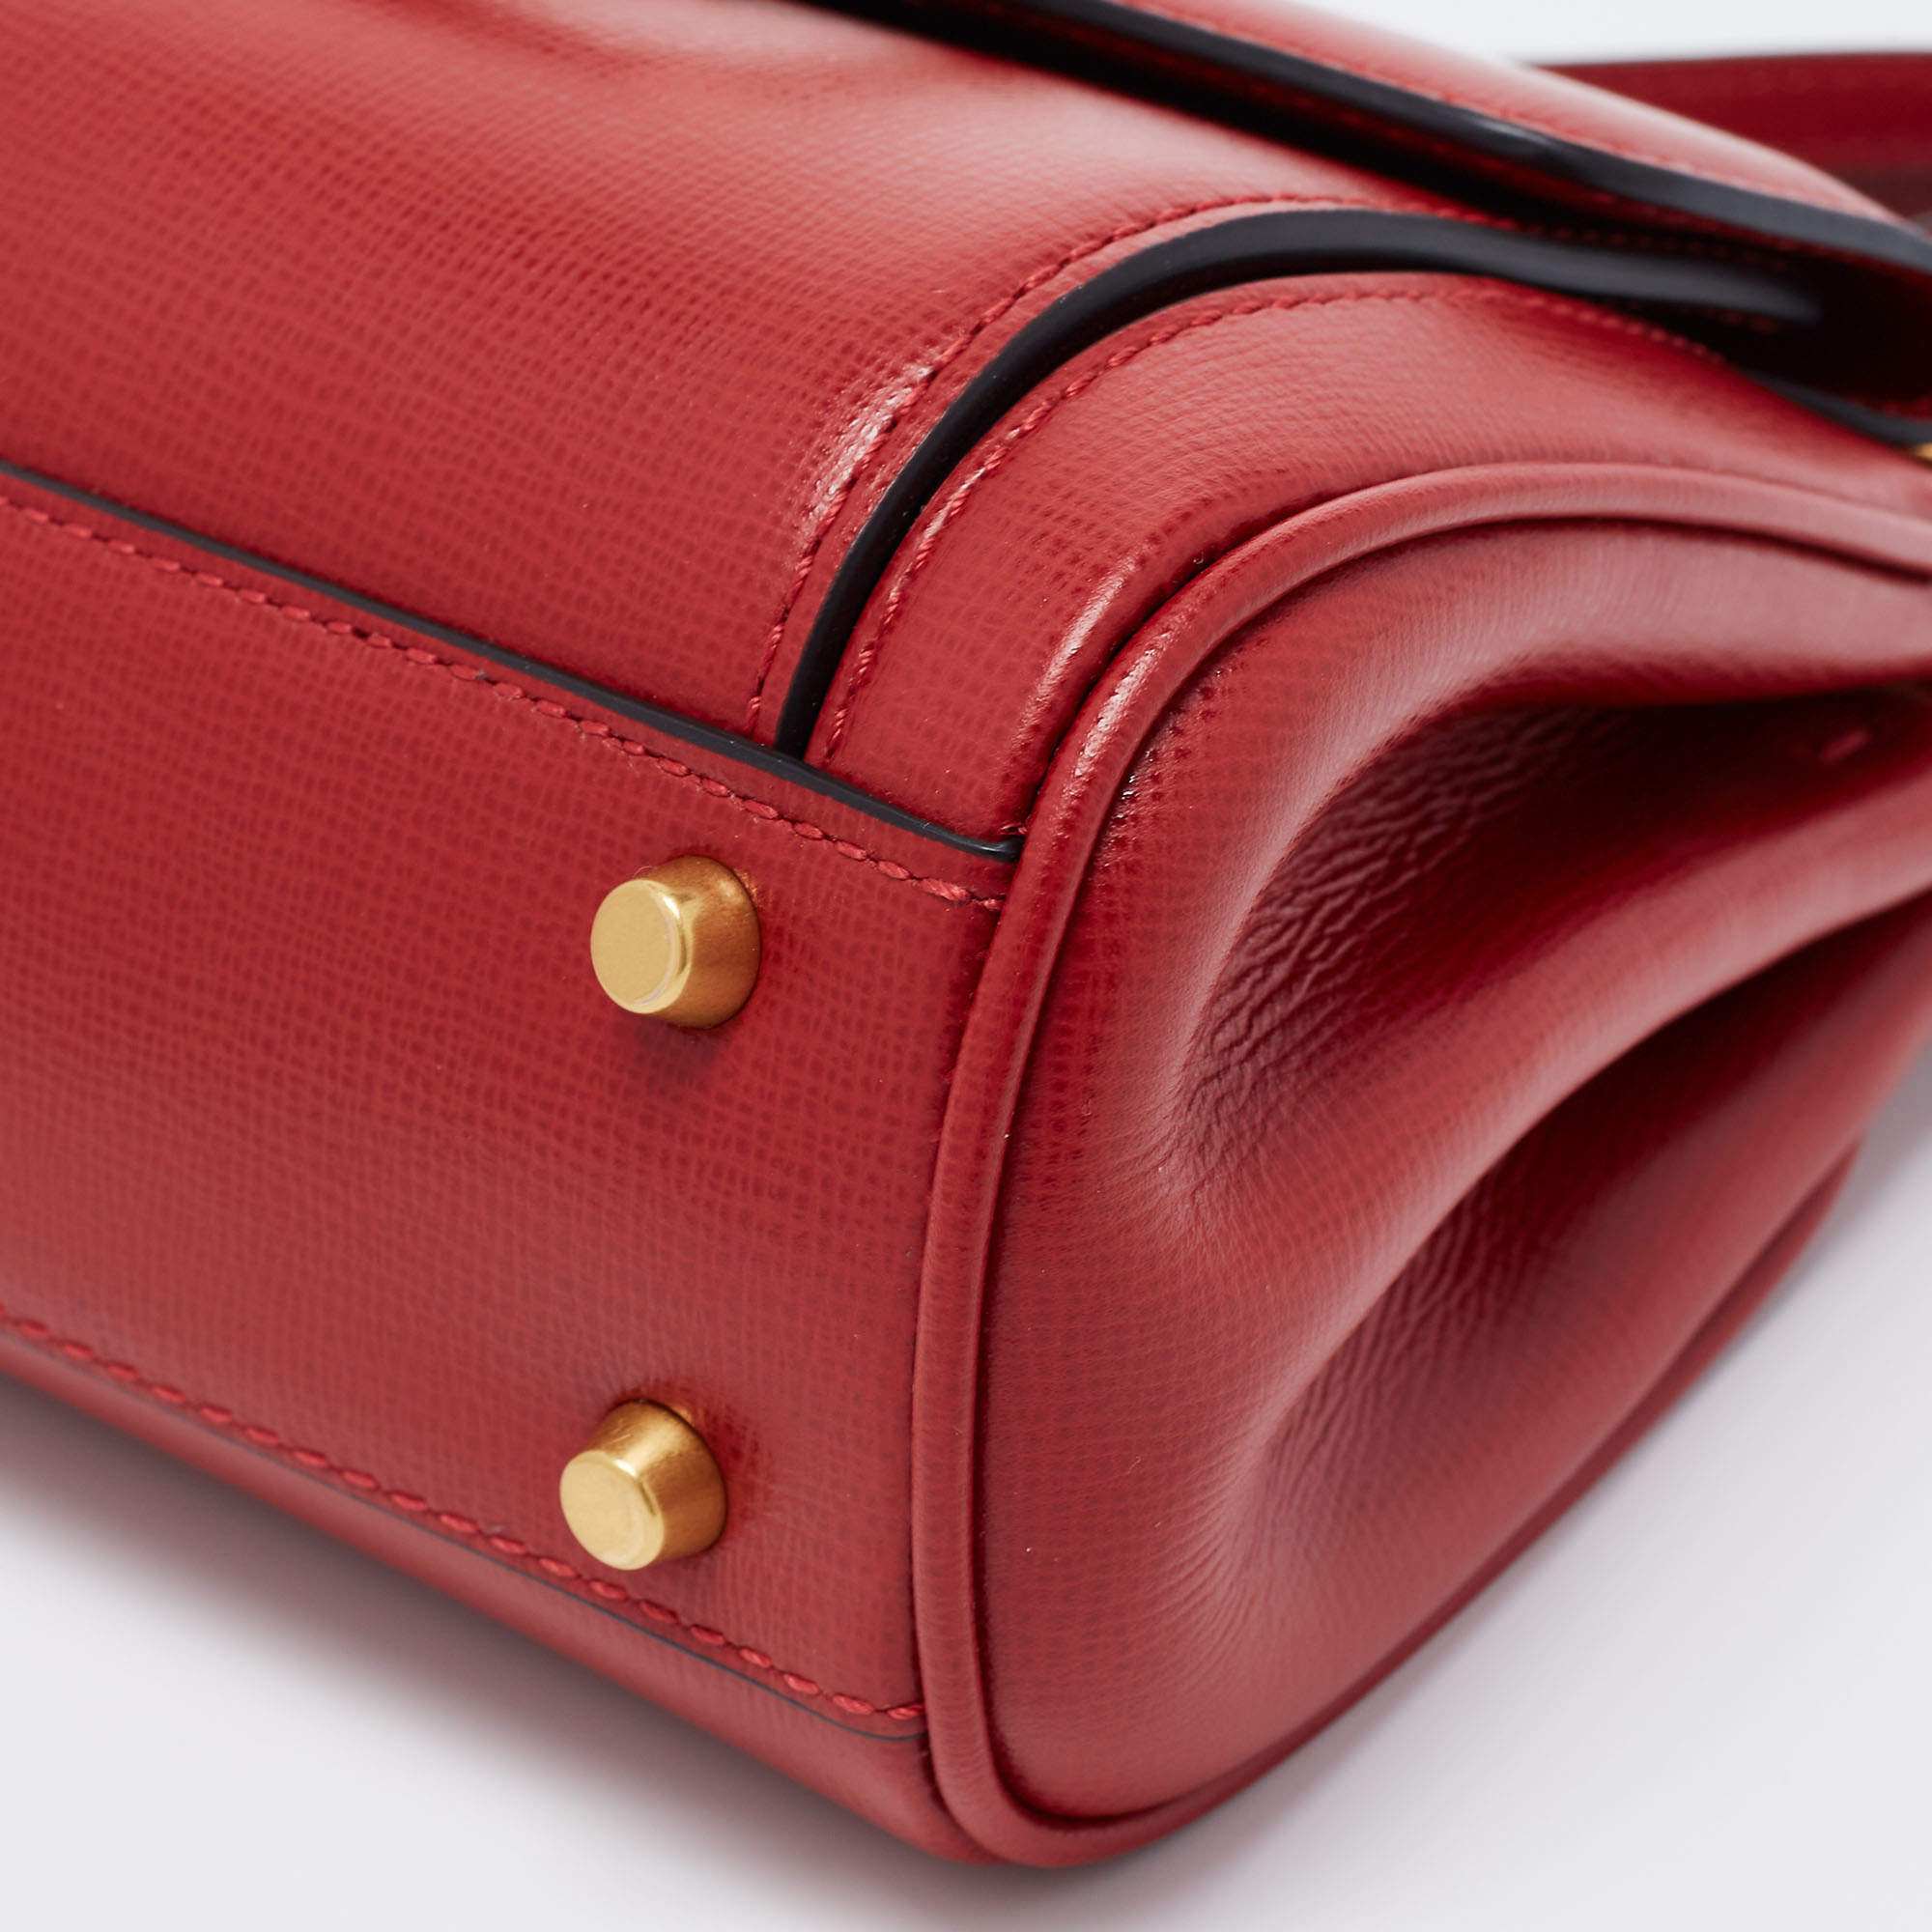 Valentino Rockstud Tote Bag - Red Totes, Handbags - VAL344612